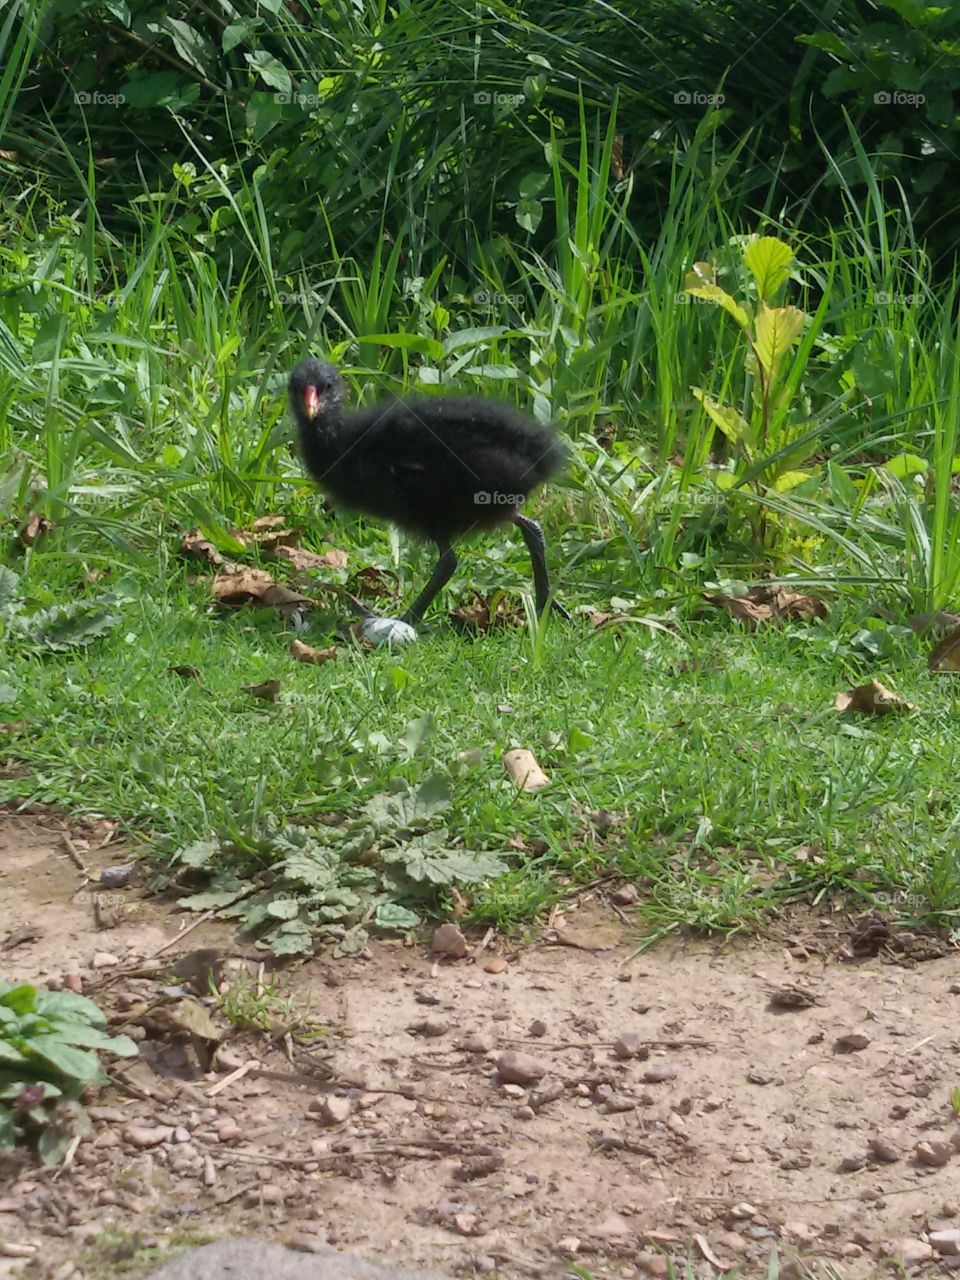 The Look auf the black little bird ...